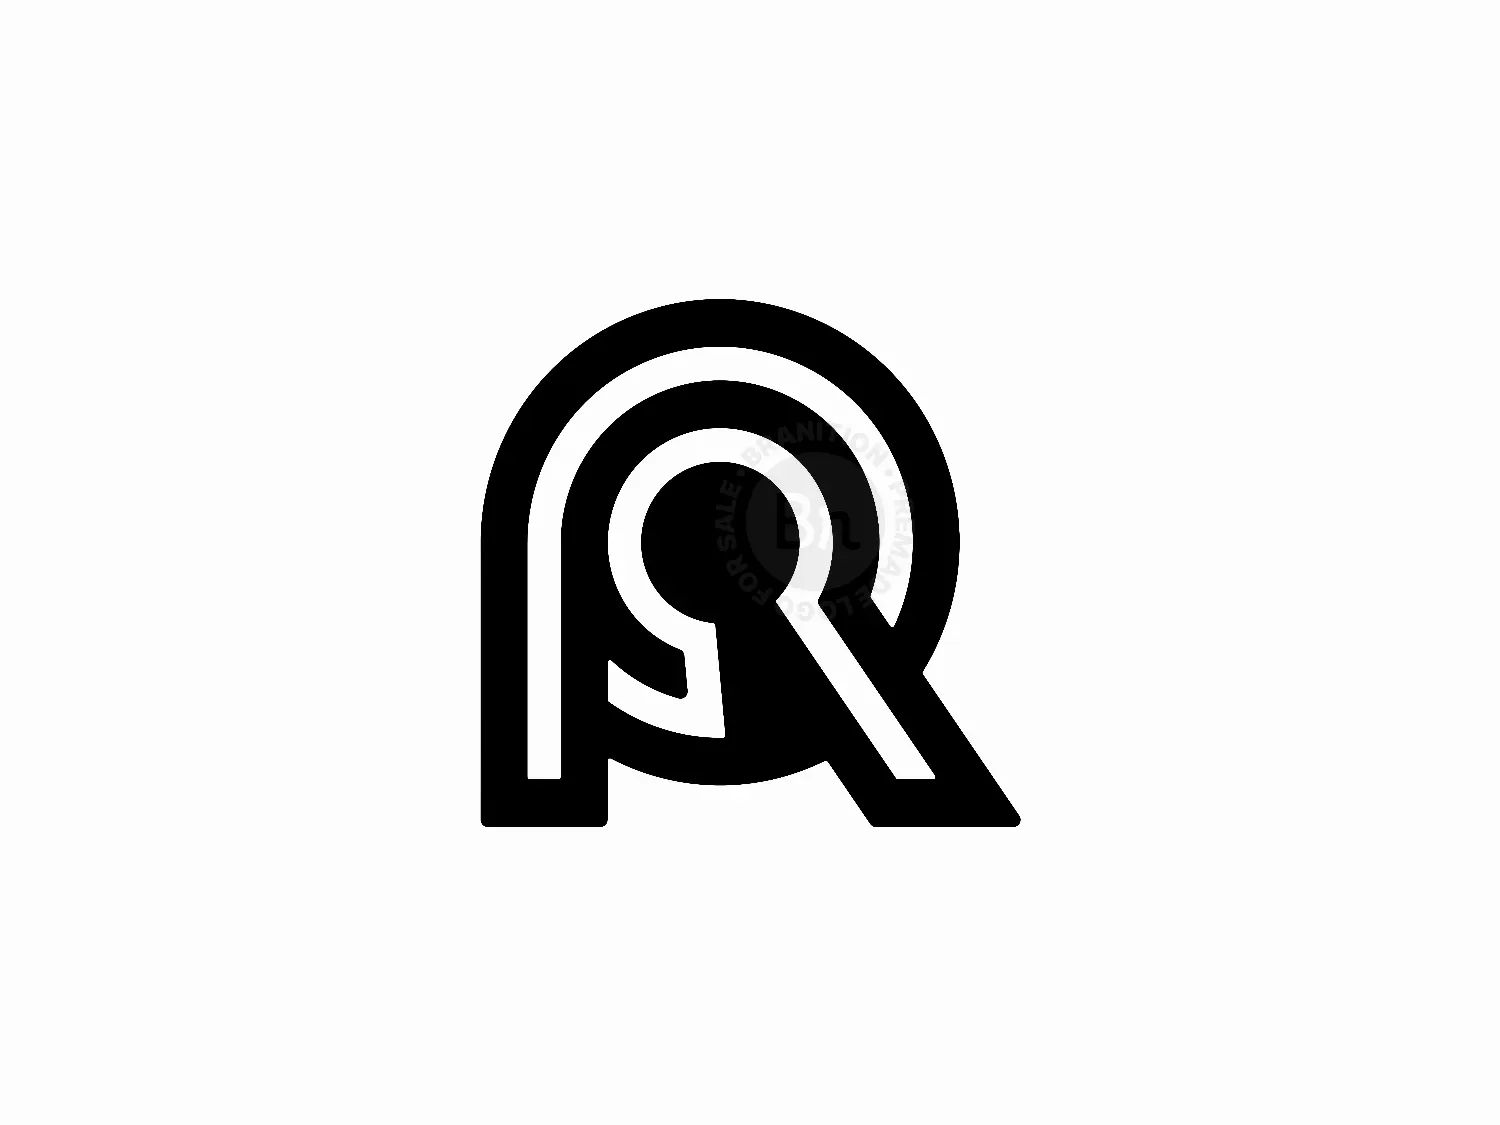 Rrr Logotype: Over 133 Royalty-Free Licensable Stock Vectors & Vector Art |  Shutterstock